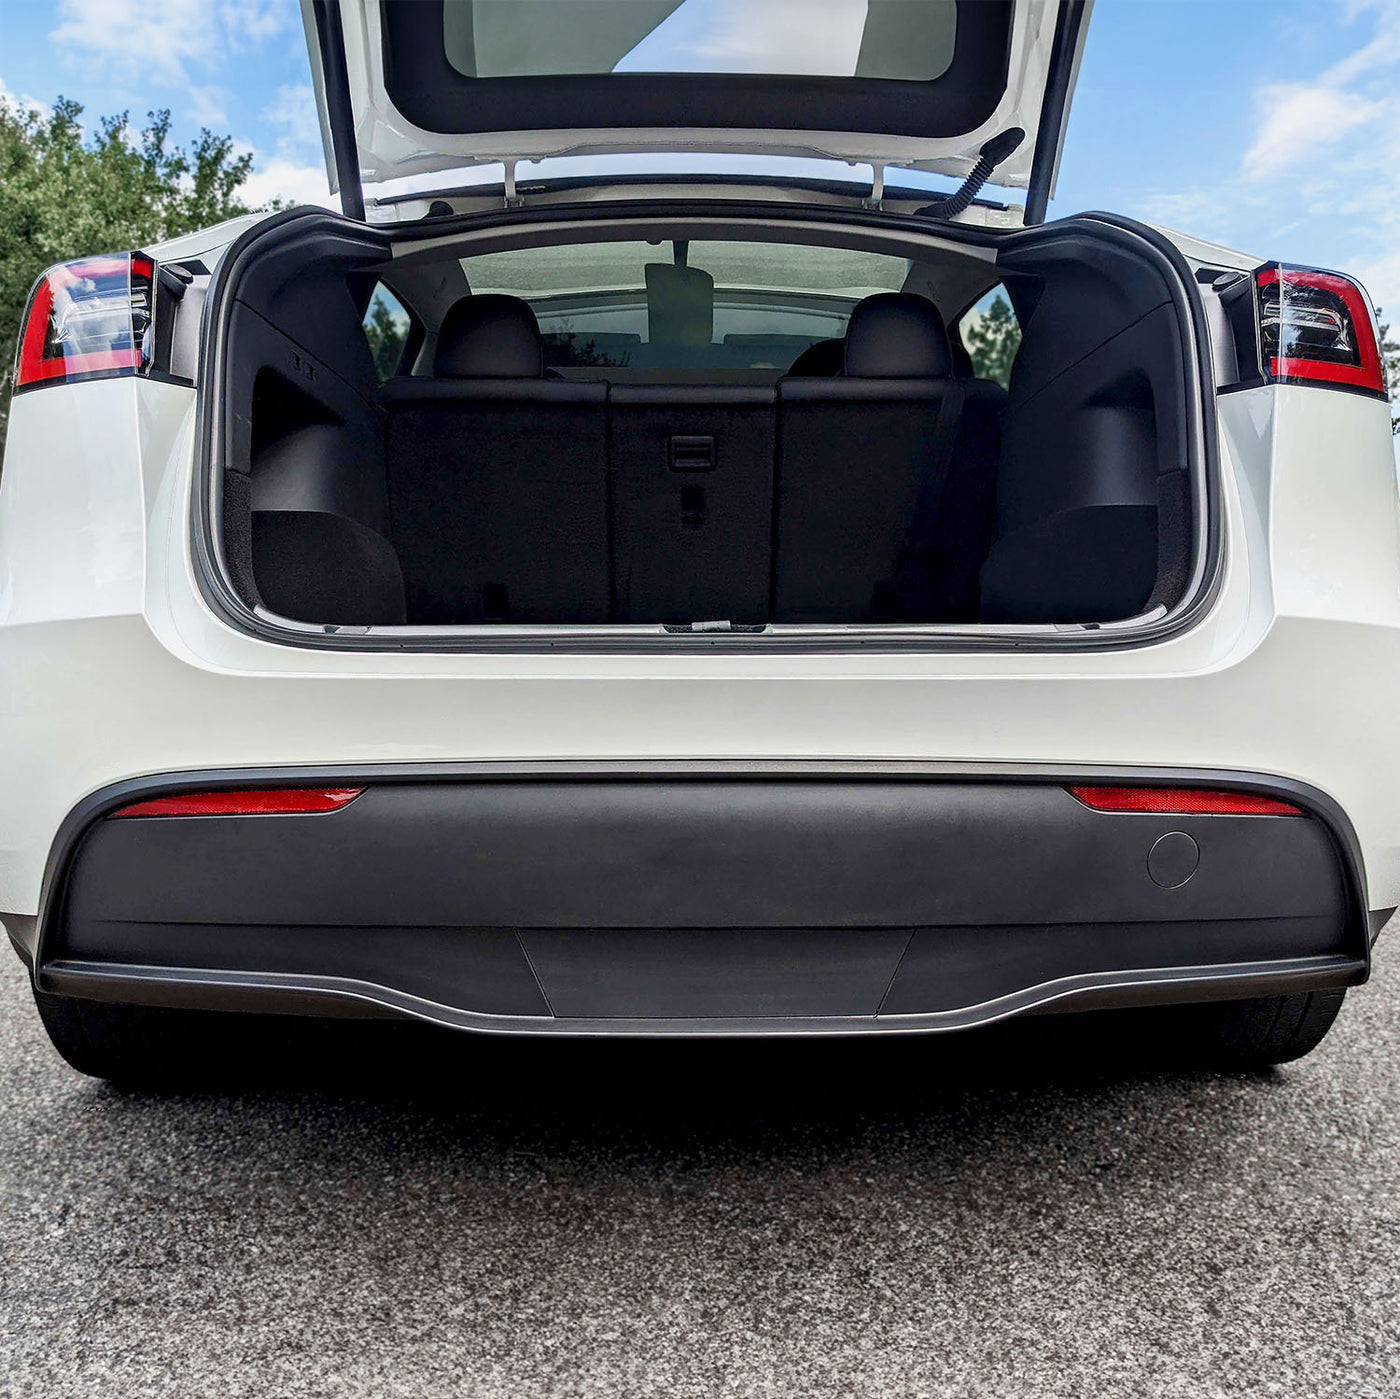 model y trunk bumper protector #ultrasonic-sensors-on-bumper_my-vehicle-has-no-sensors